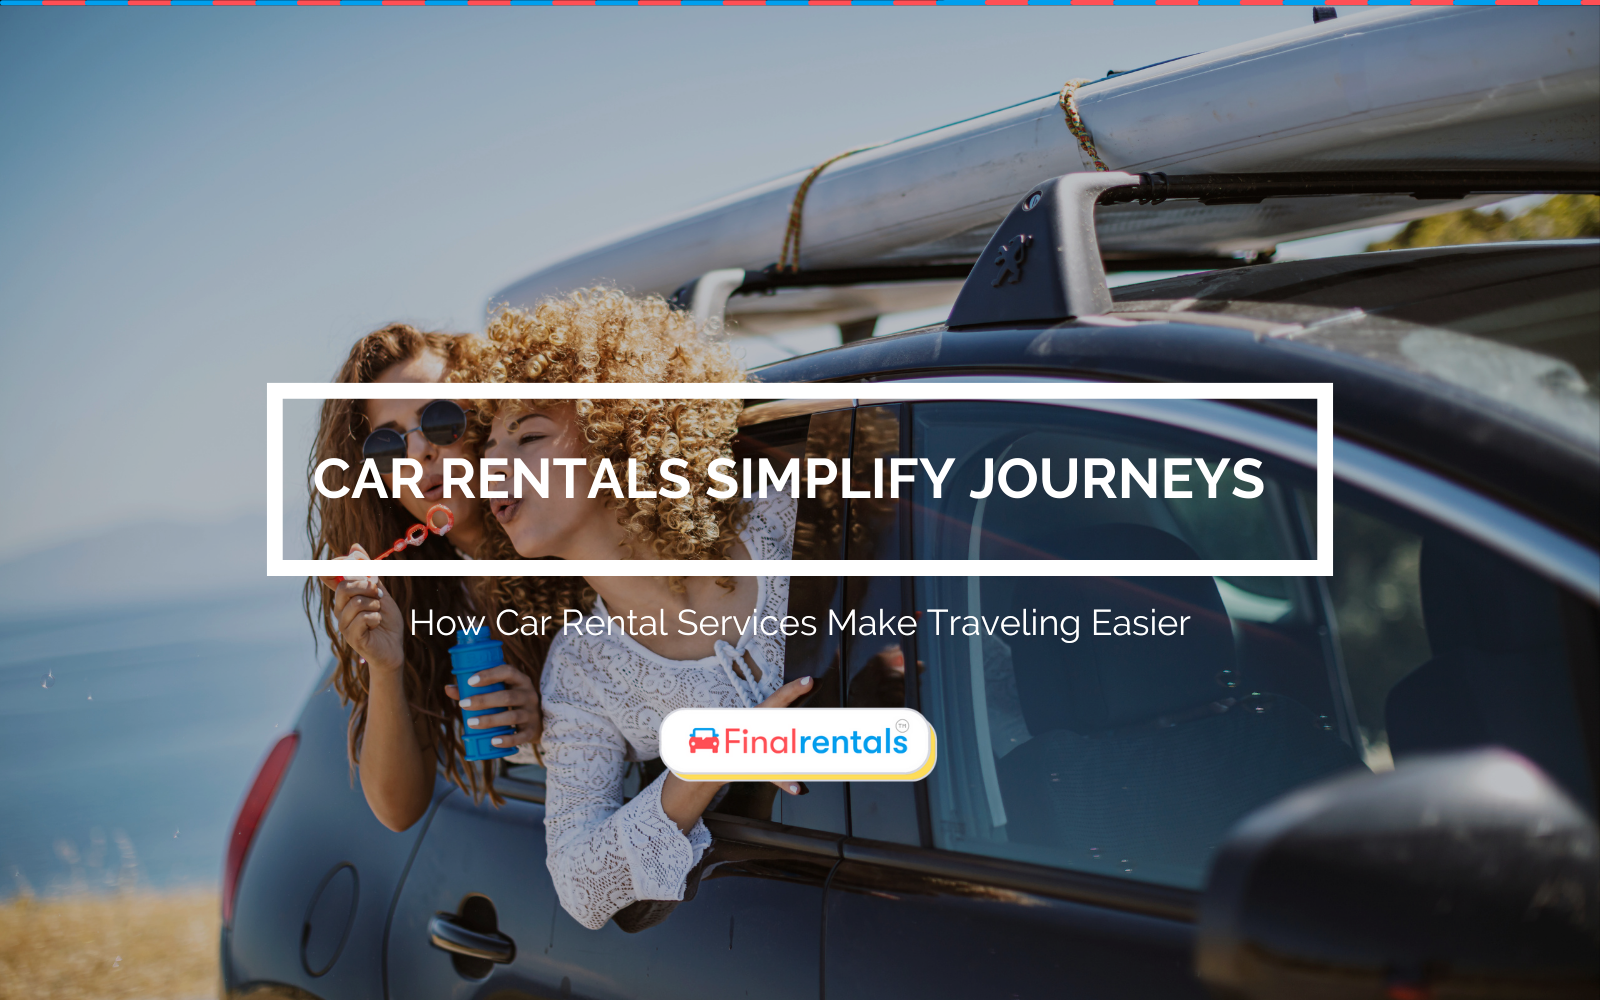 How Car Rental Services Make Travelling Easier